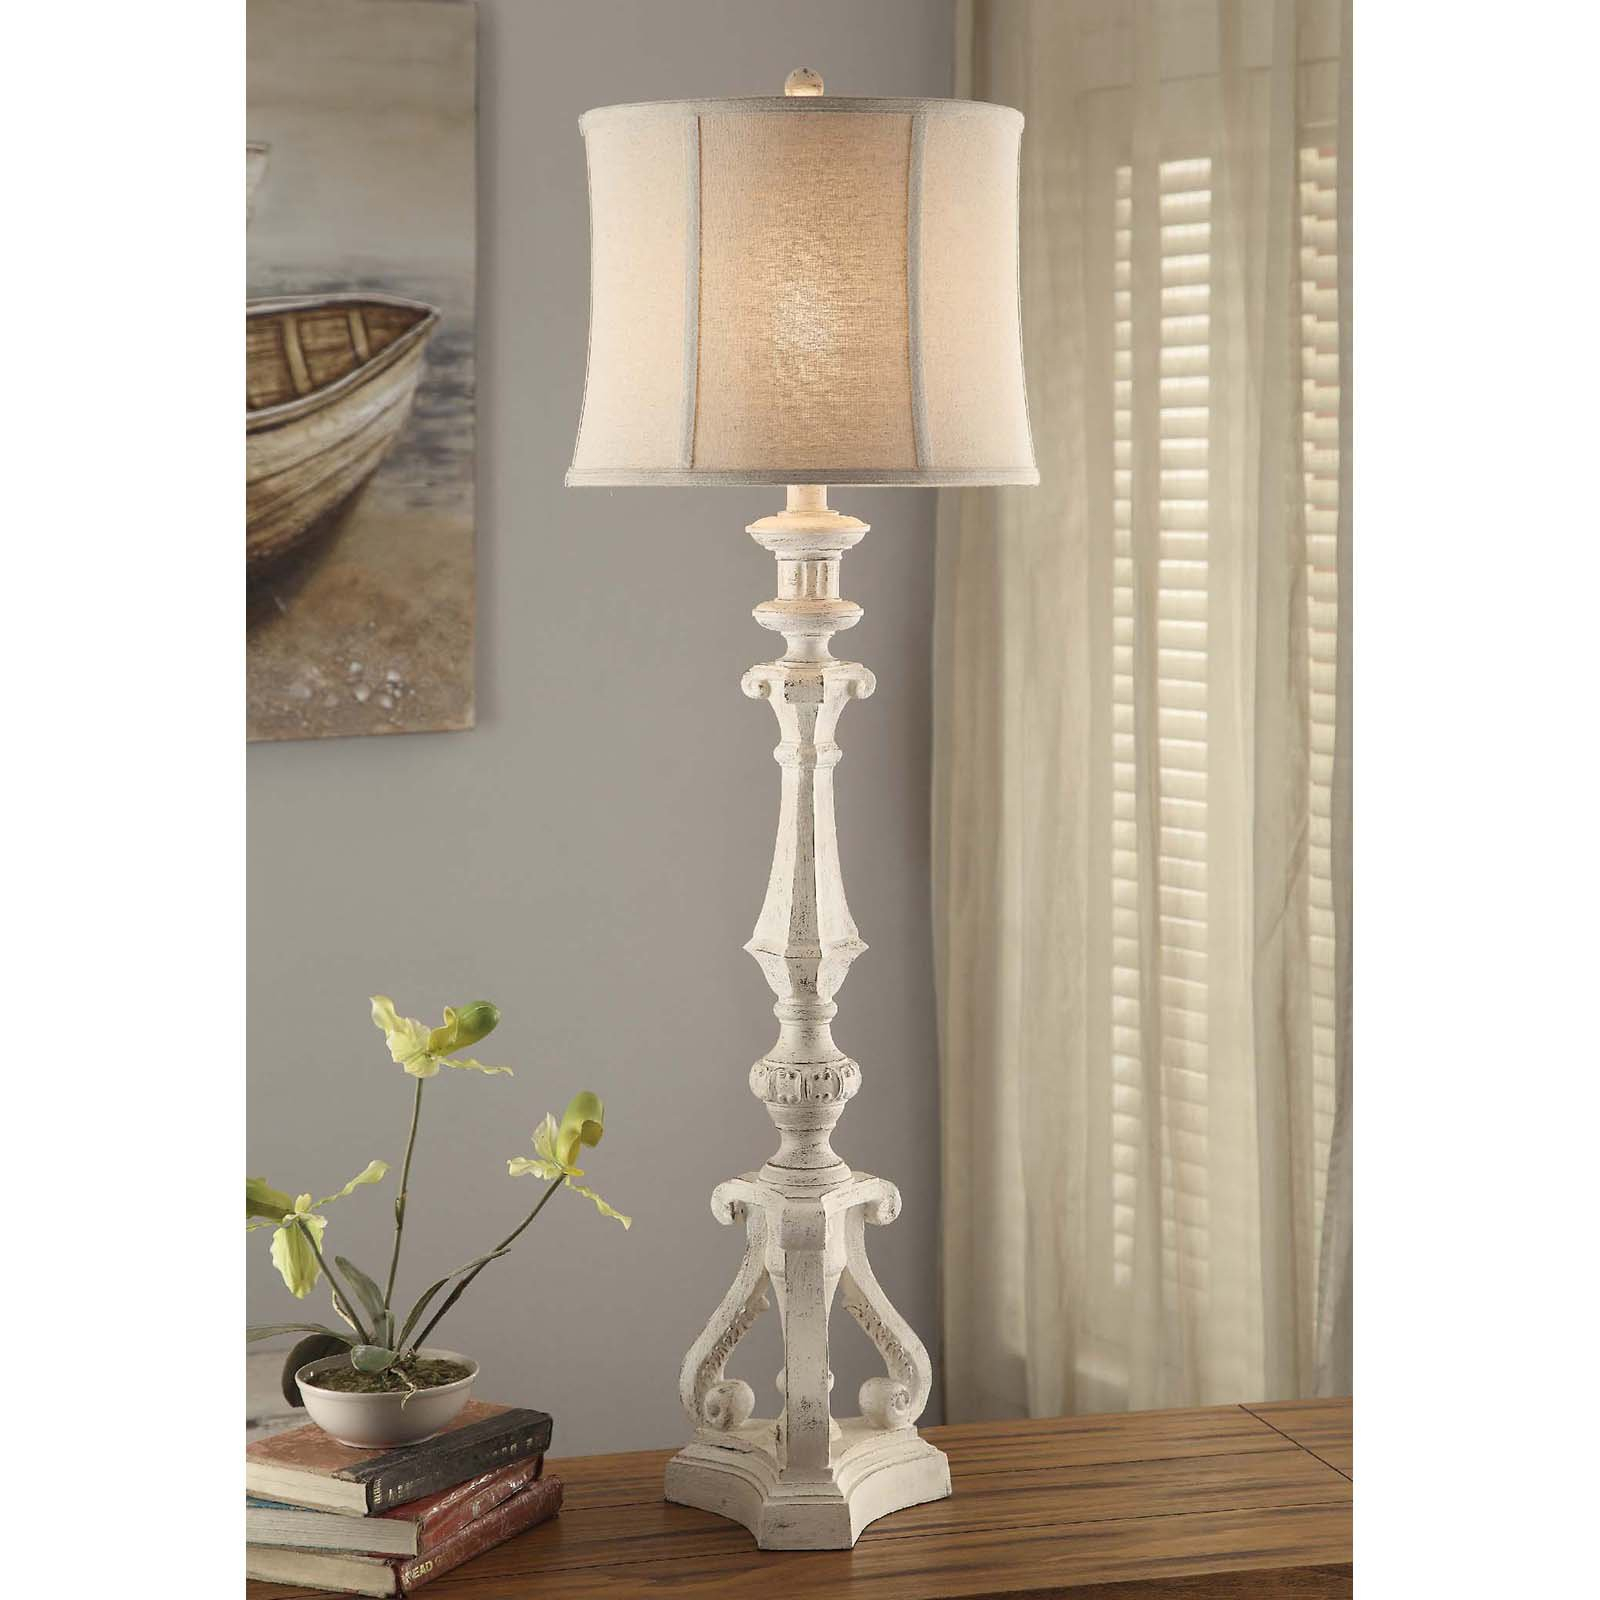 Crestview Collection Serenity Table Lamp In 2019 Buffet regarding measurements 1600 X 1600